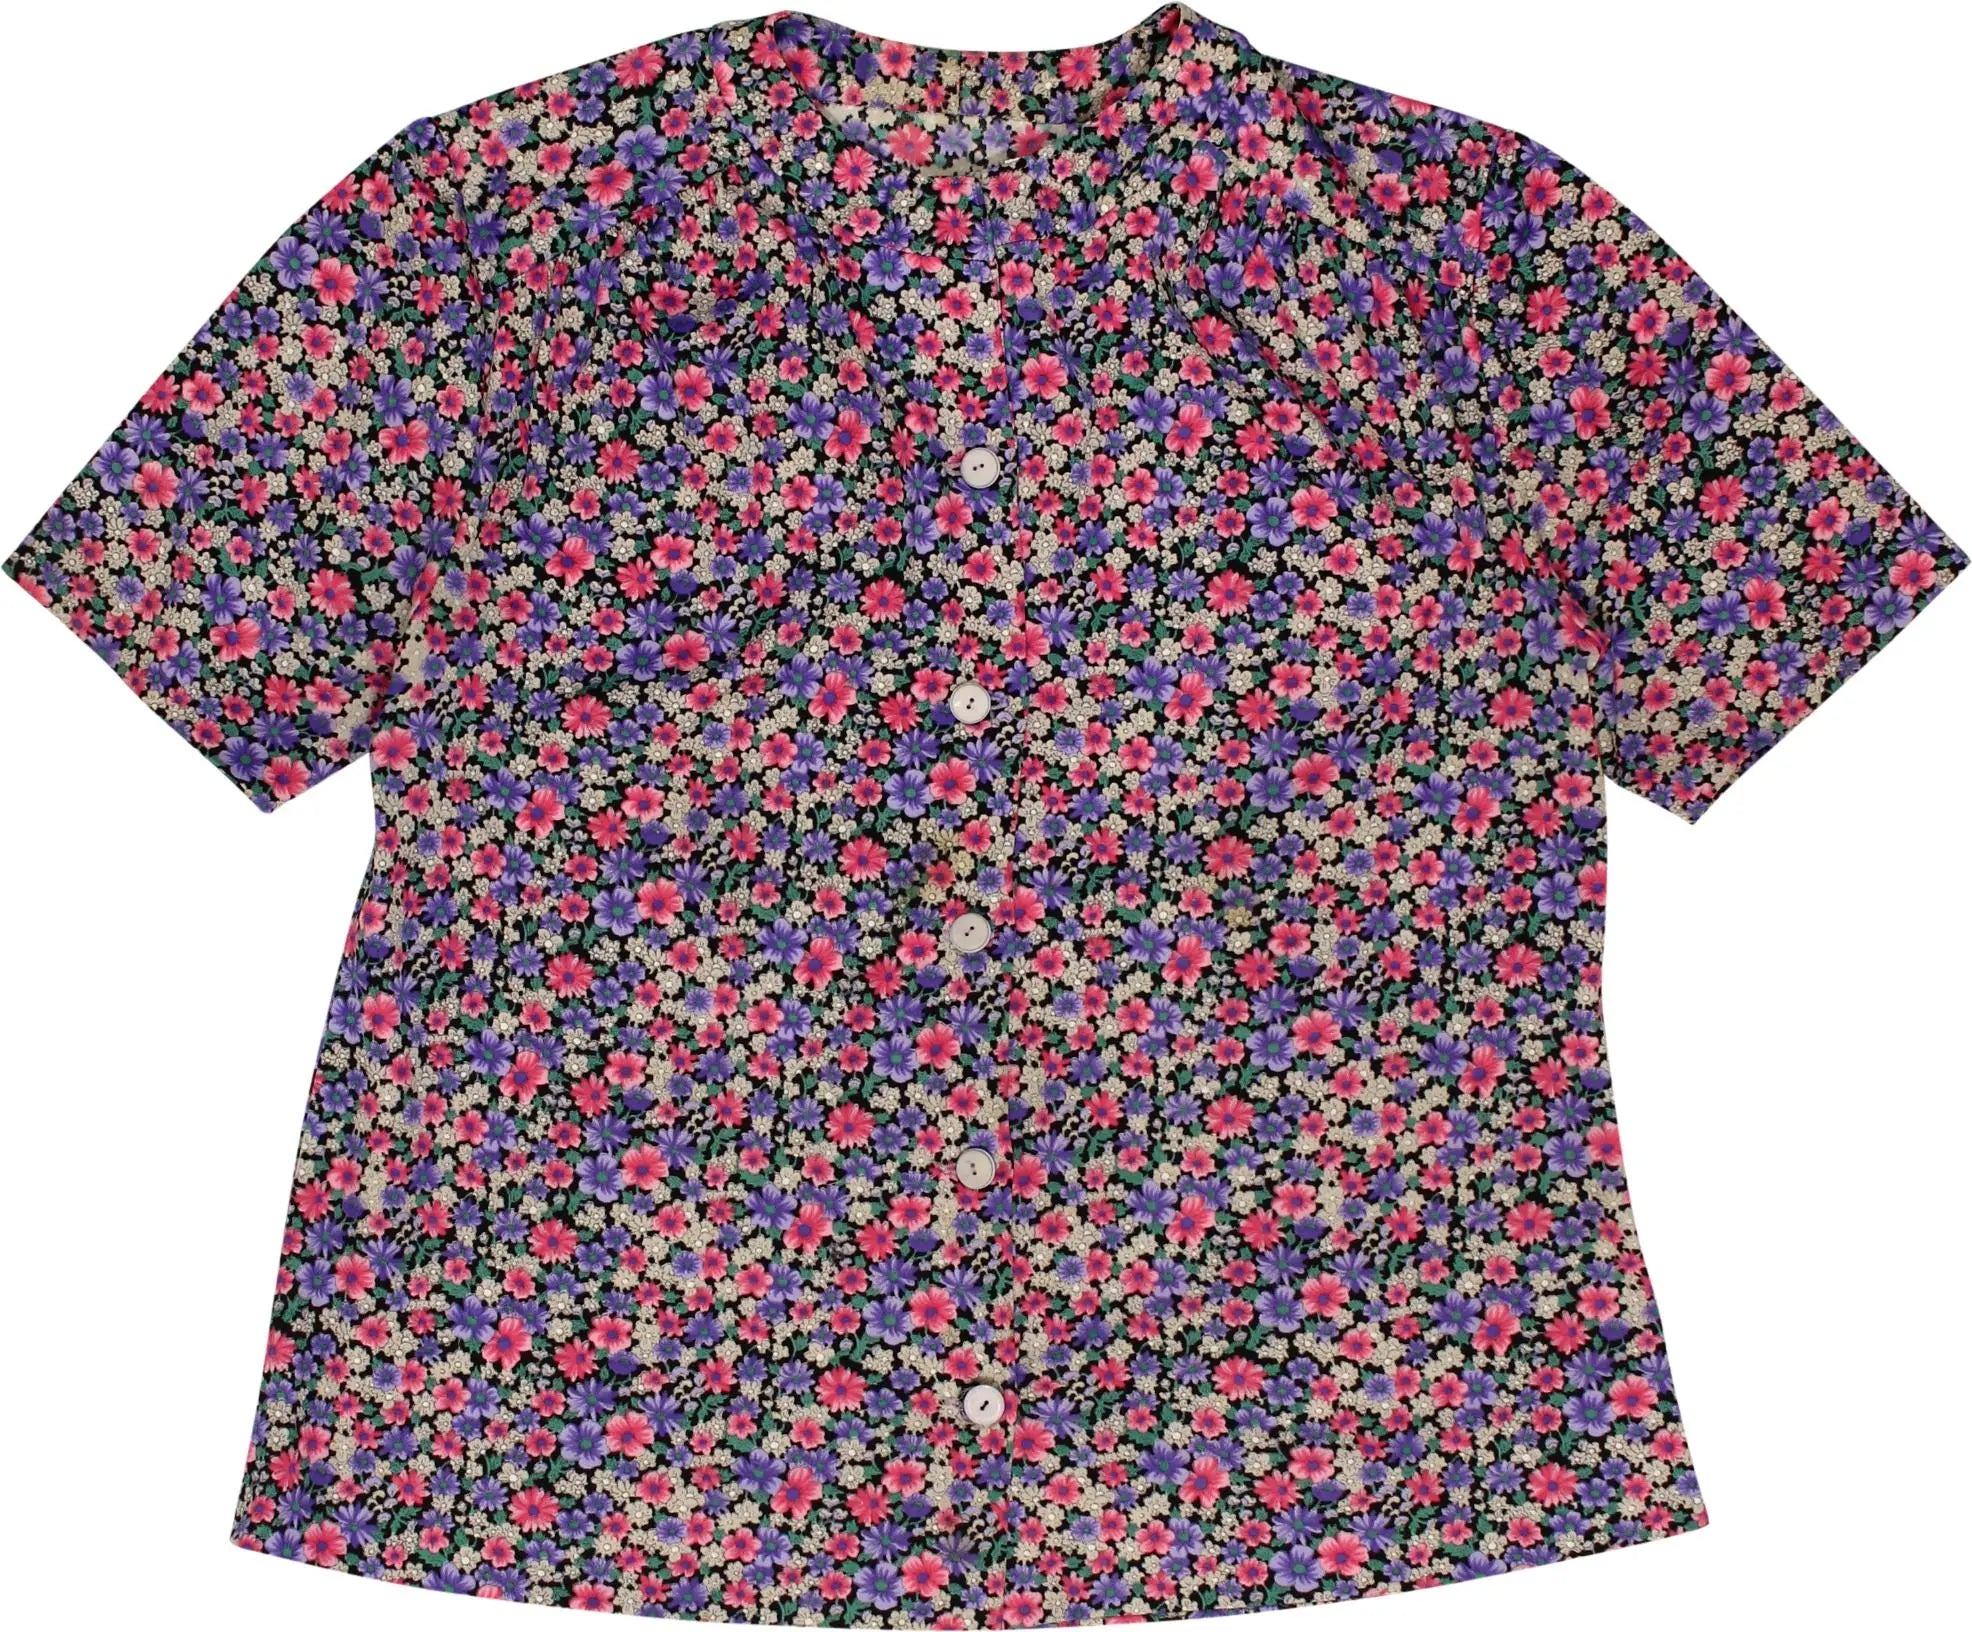 Handmade - Handmade 90s Shirt- ThriftTale.com - Vintage and second handclothing